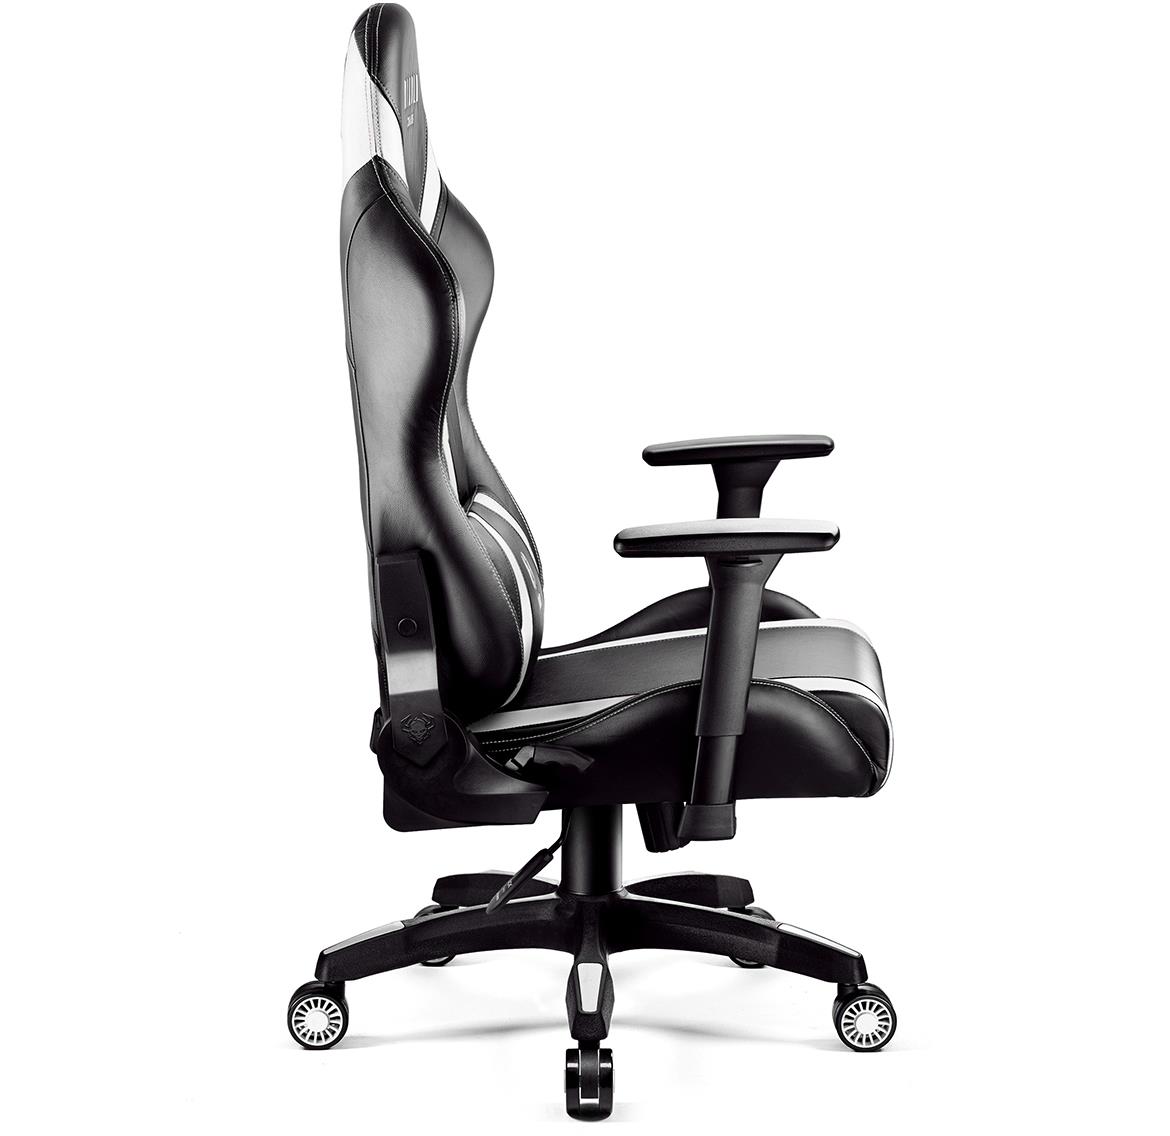 King Diablo X-Horn 2.0 kancelarijska stolica 73x59x133 cm crno bela